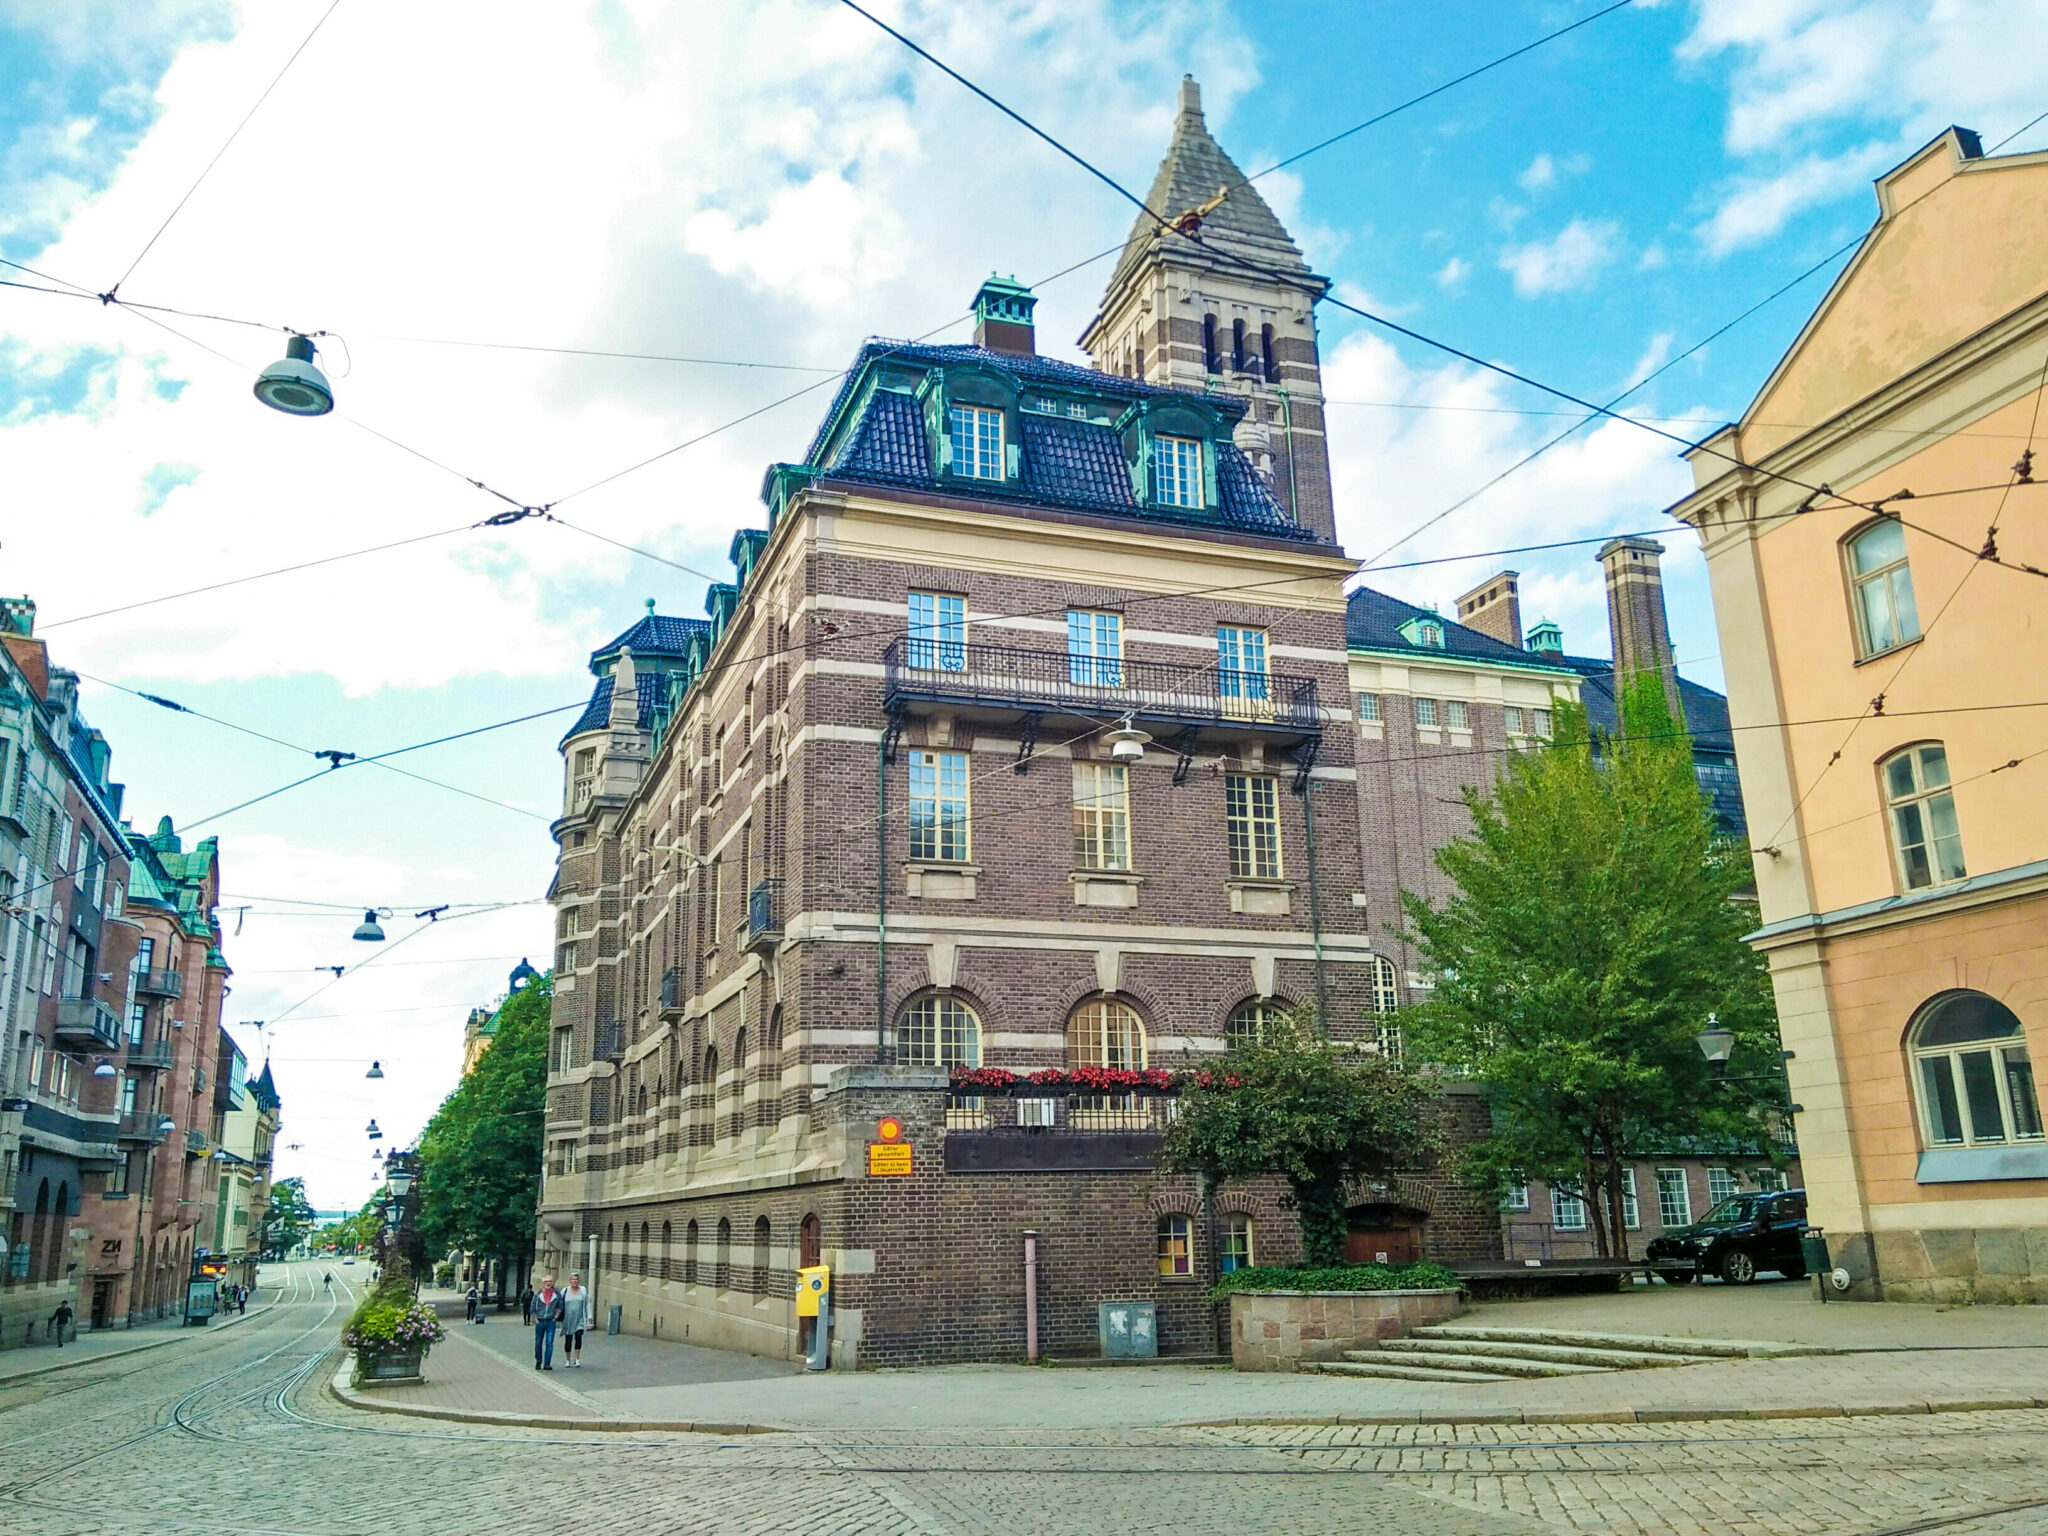 A street in Aalborg, Denmark with tram tracks, old-style brick buildings, and people walking in the sidewalks.